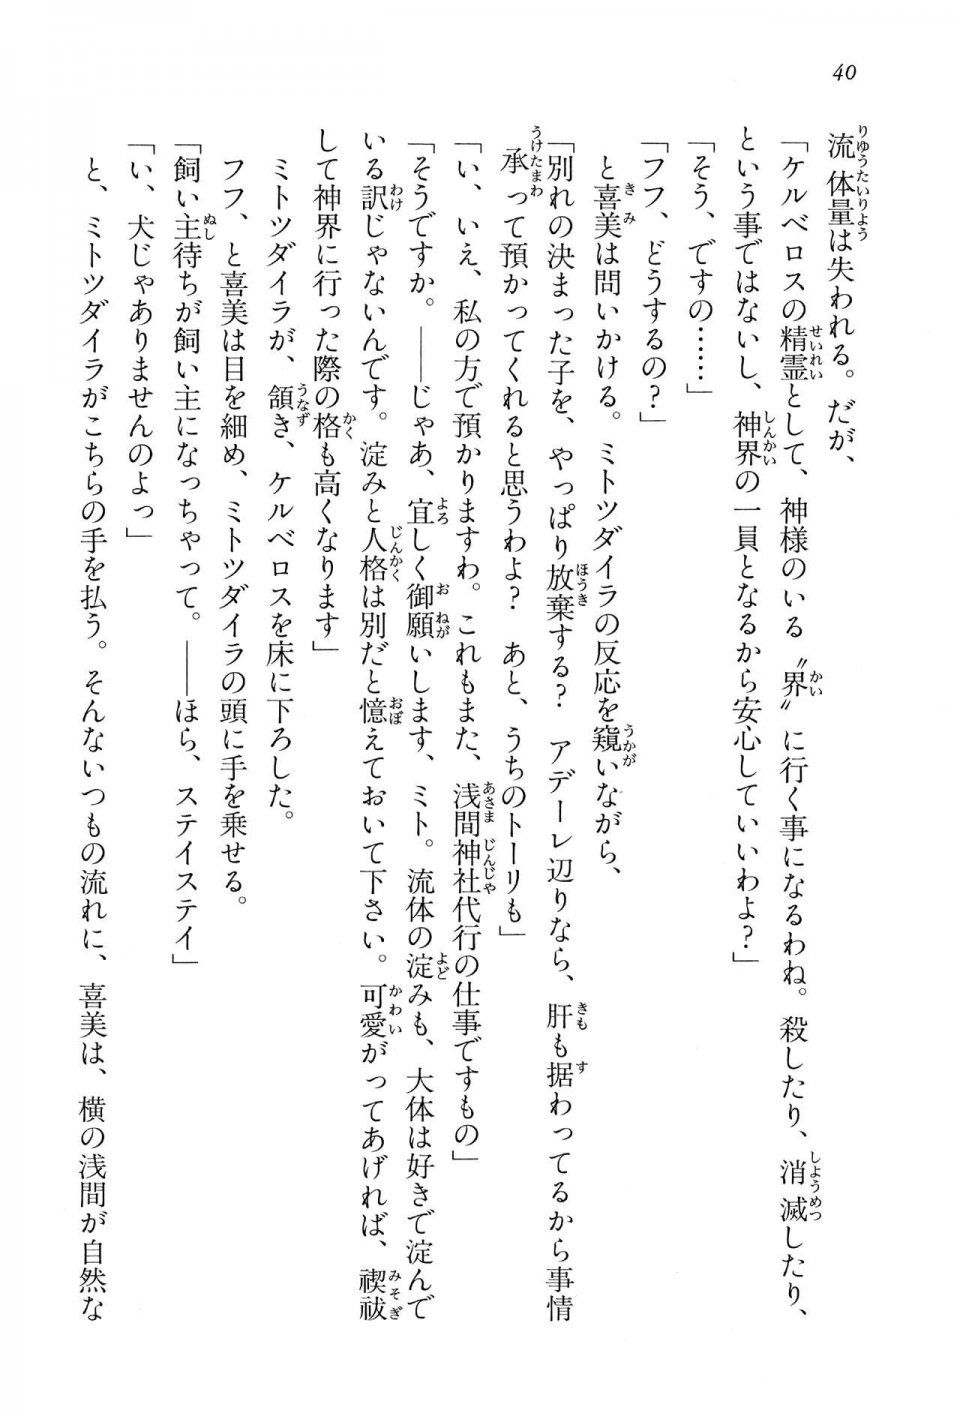 Kyoukai Senjou no Horizon BD Special Mininovel Vol 1(1A) - Photo #44